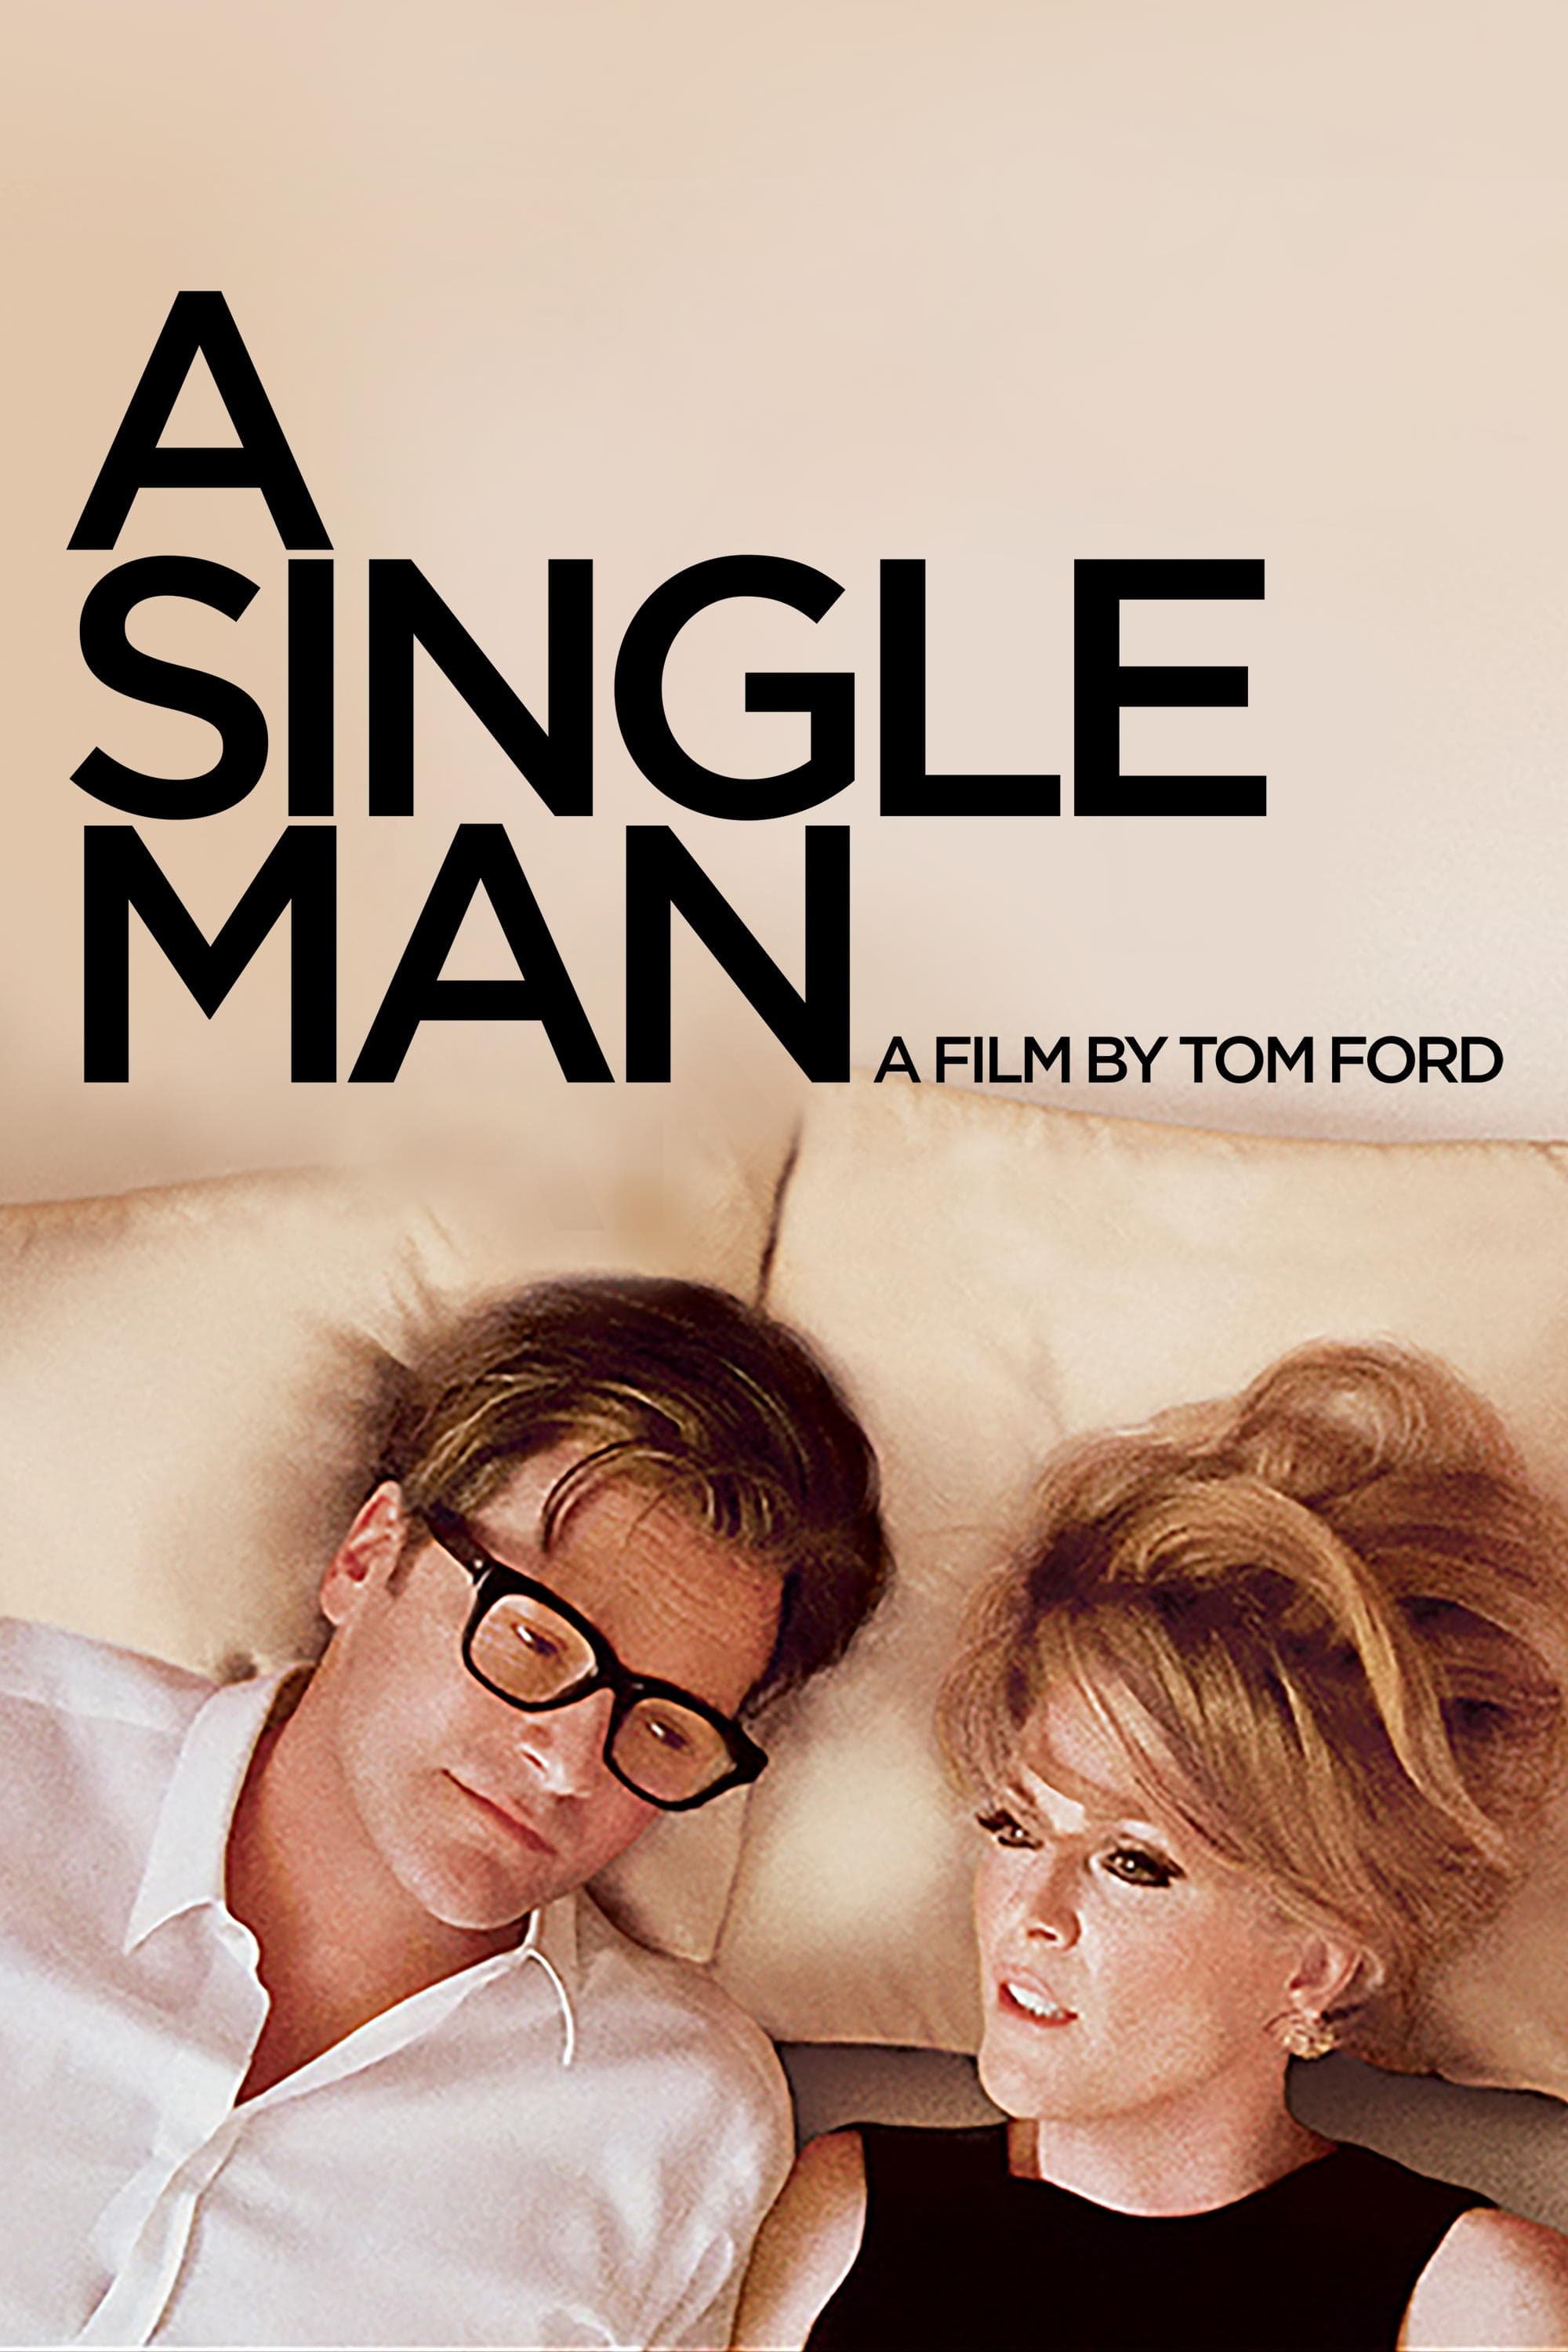 A Single Man film poster